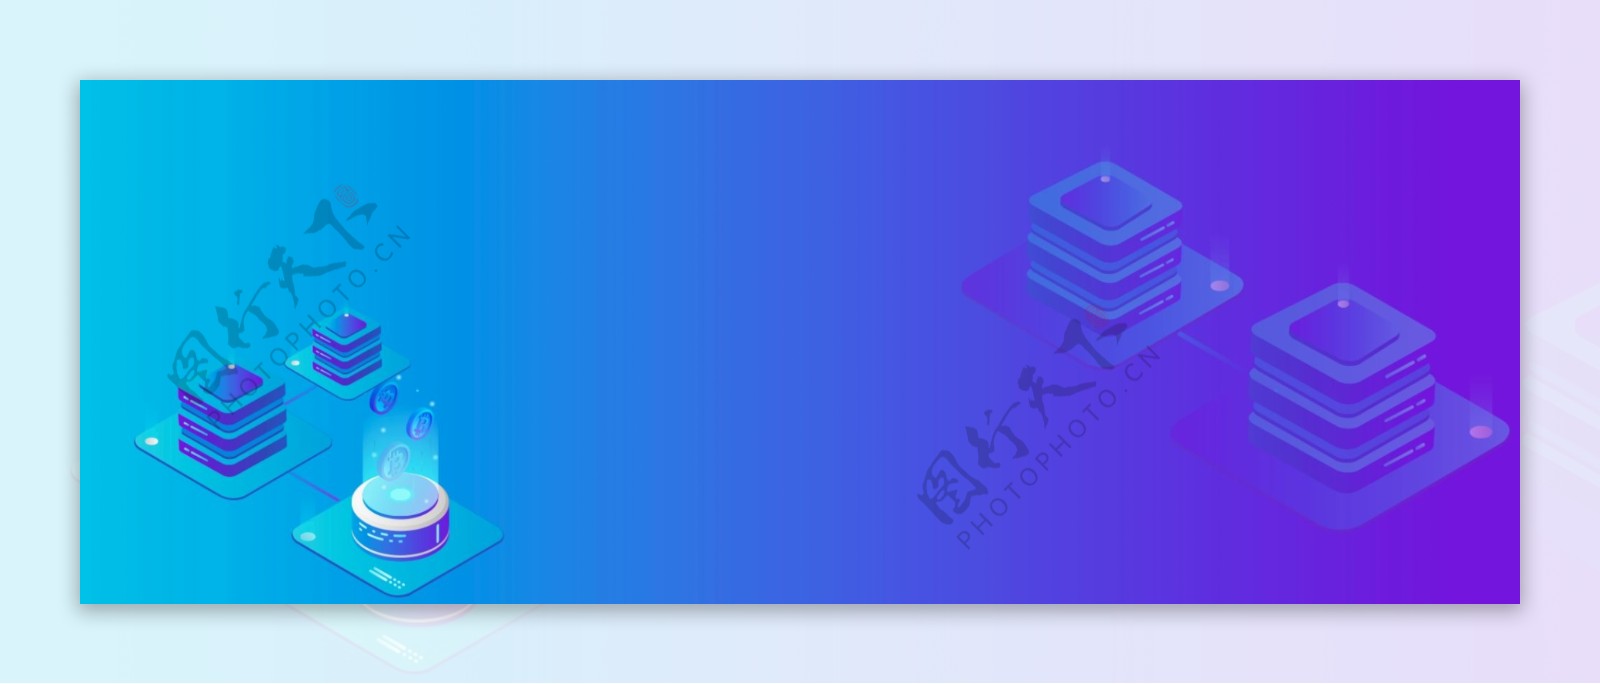 2.5D互联网蓝色科技banner背景